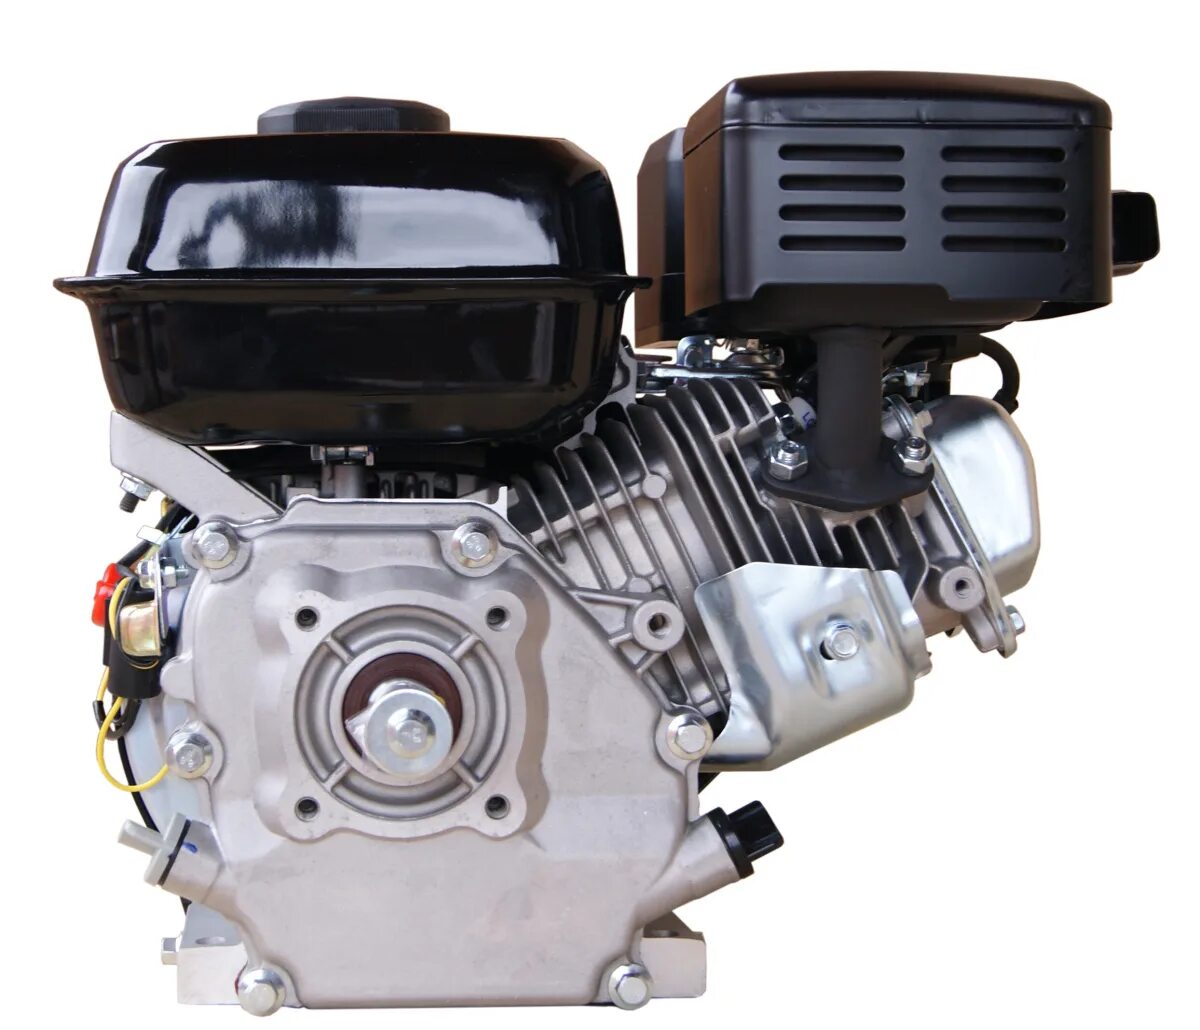 Двигатель lifan 168. Двигатель бензиновый Lifan 168f-2. Двигатель бензиновый Lifan 170f. Двигатель Lifan 170f 7,0 л.с.. Двигатель Lifan 6,5 л.с. 168f-2.